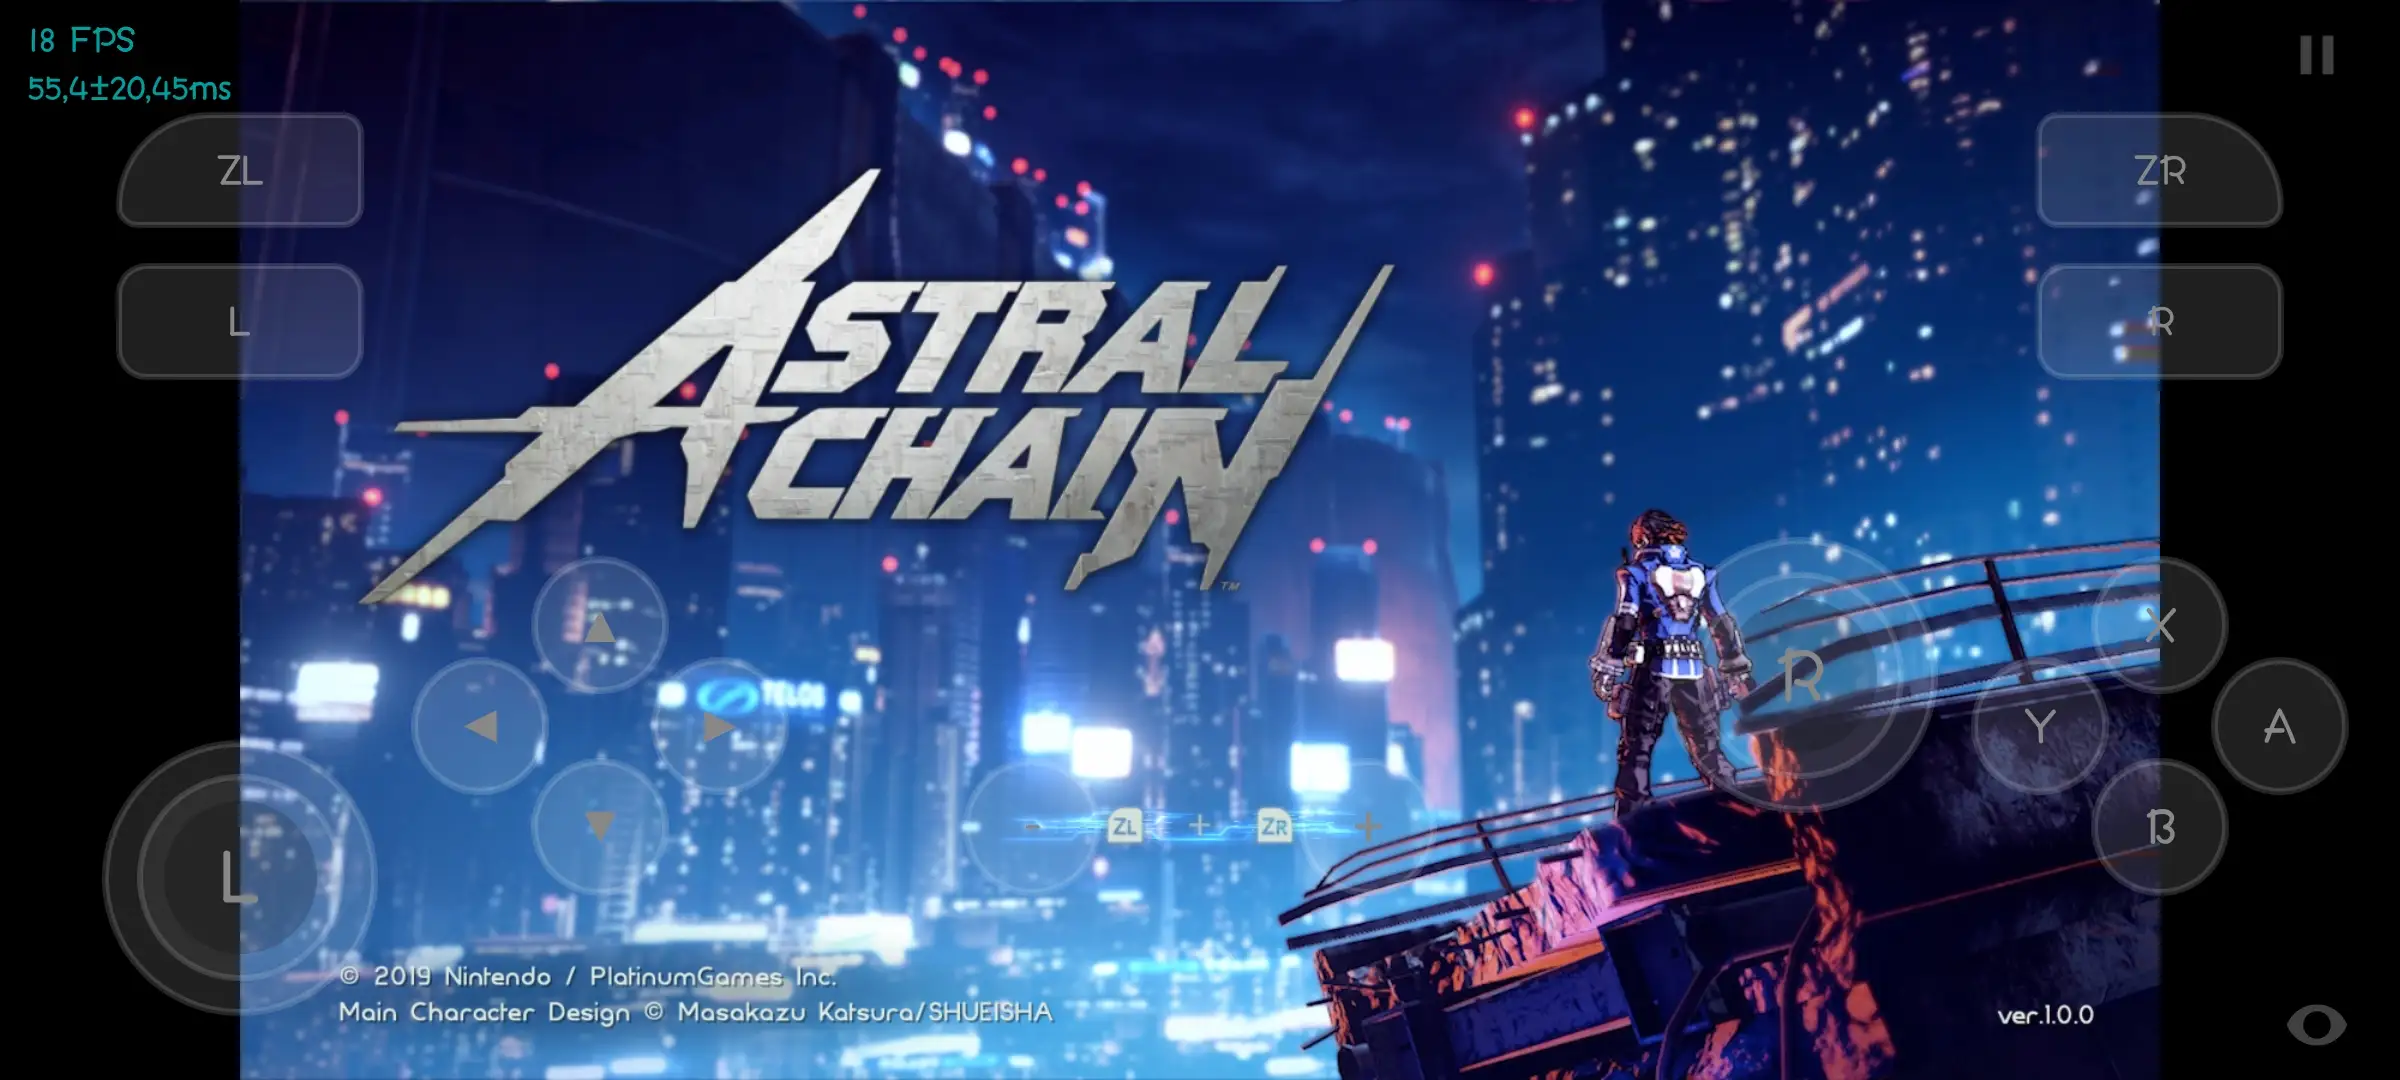 Astral Chain Skyline Emulator Download Android - Skyline Edge Emulator